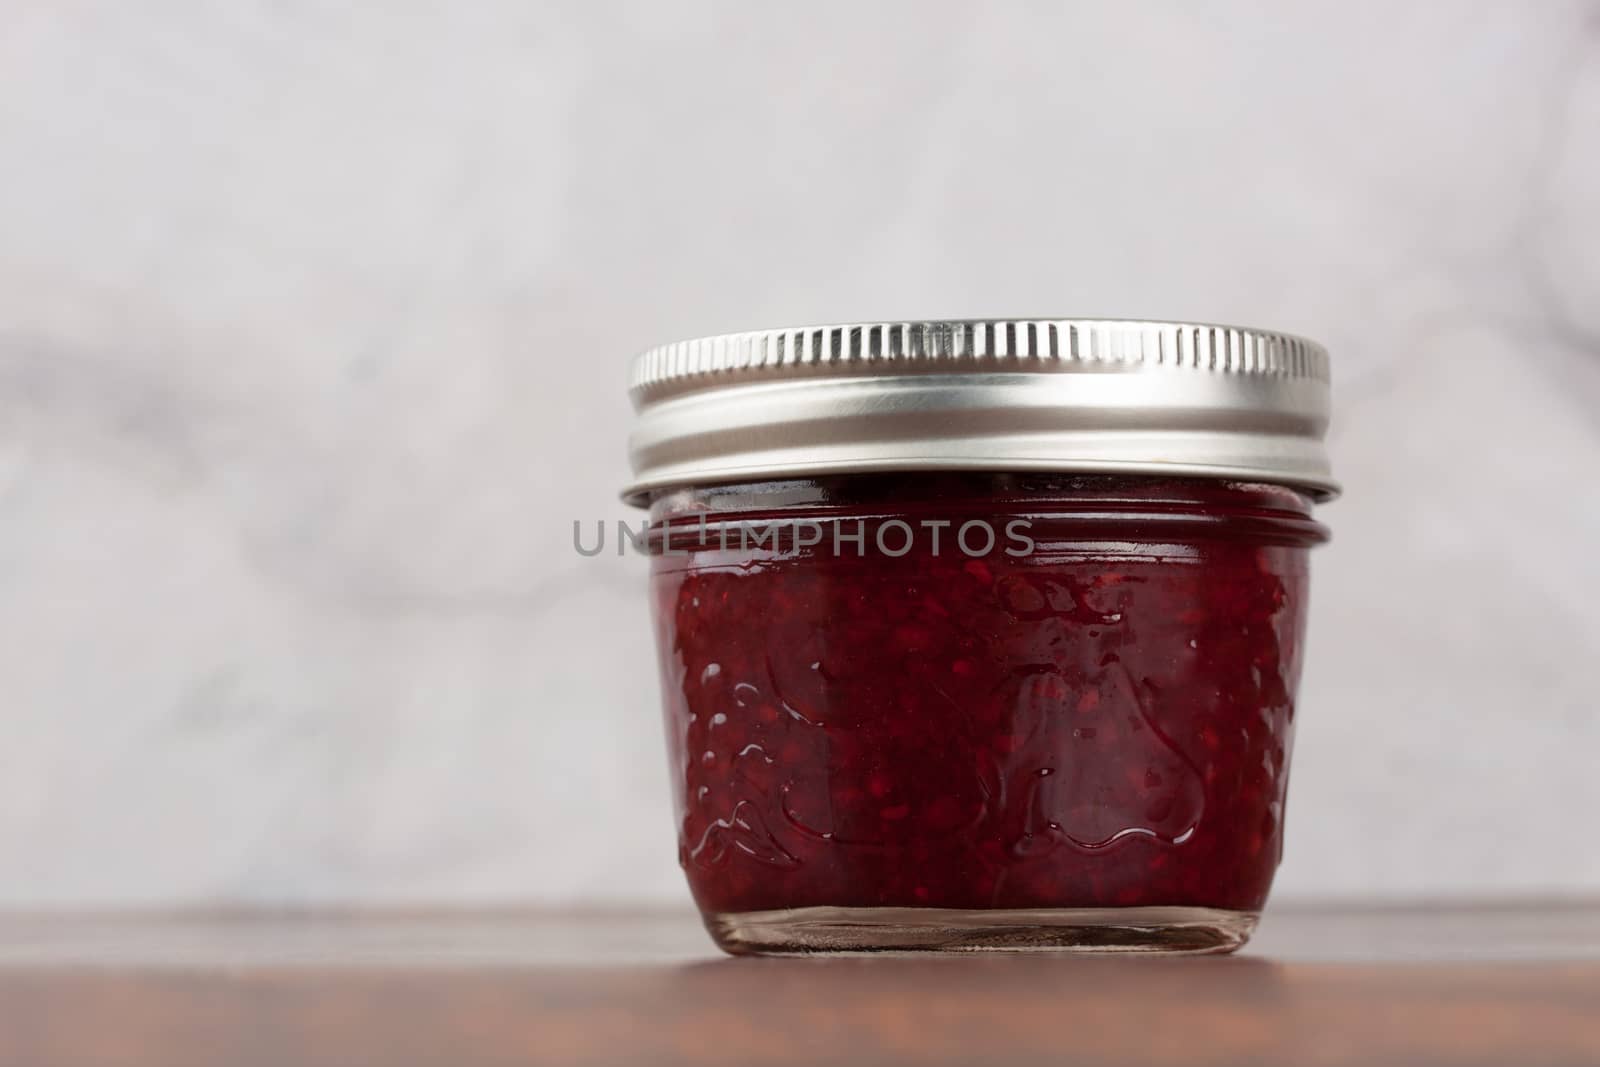 Homemade raspberry jam in a reusable glass jar by lanalanglois